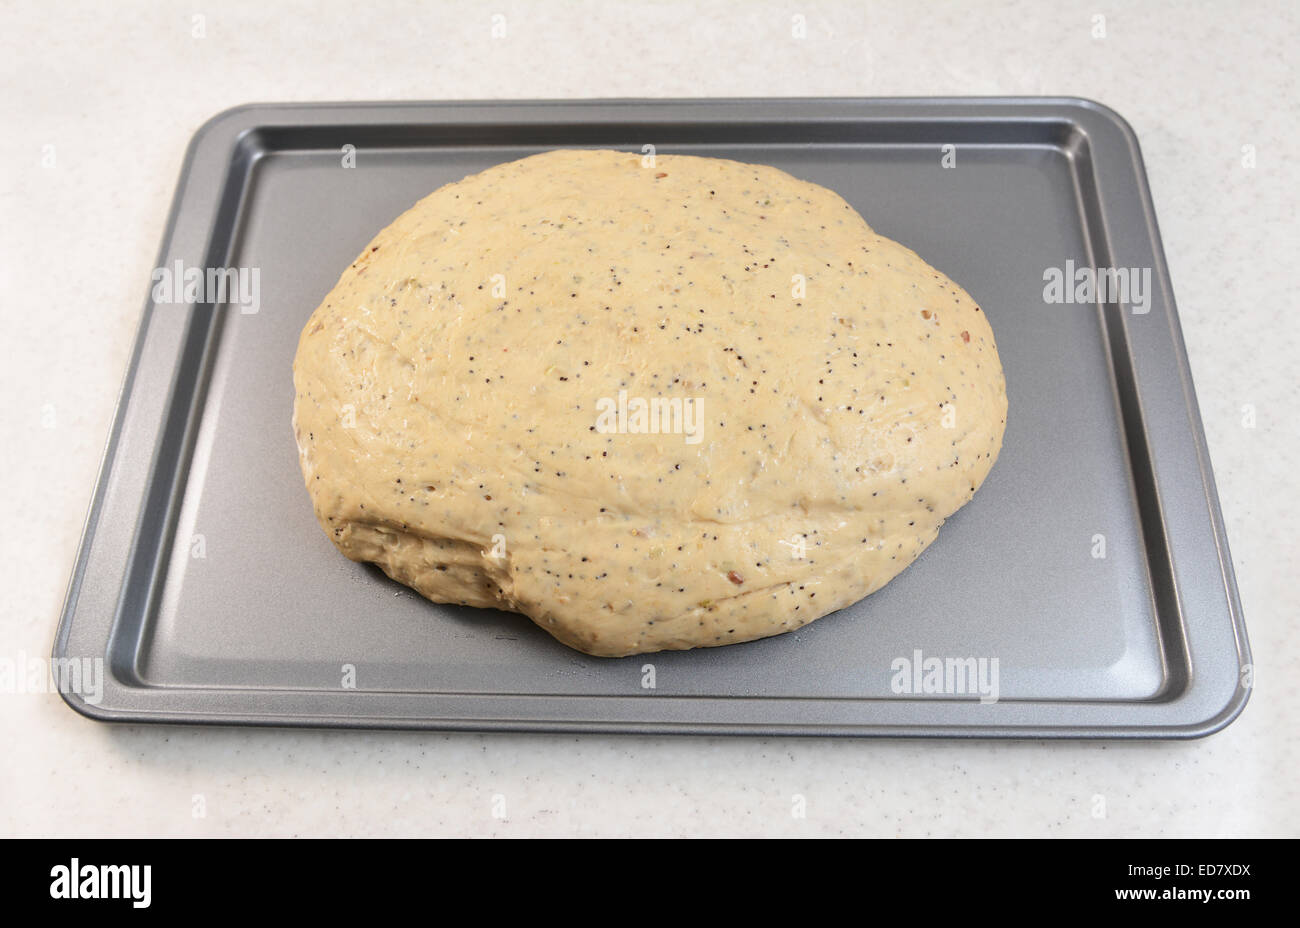 https://c8.alamy.com/comp/ED7XDX/risen-bread-dough-on-a-baking-sheet-after-a-second-proving-ED7XDX.jpg